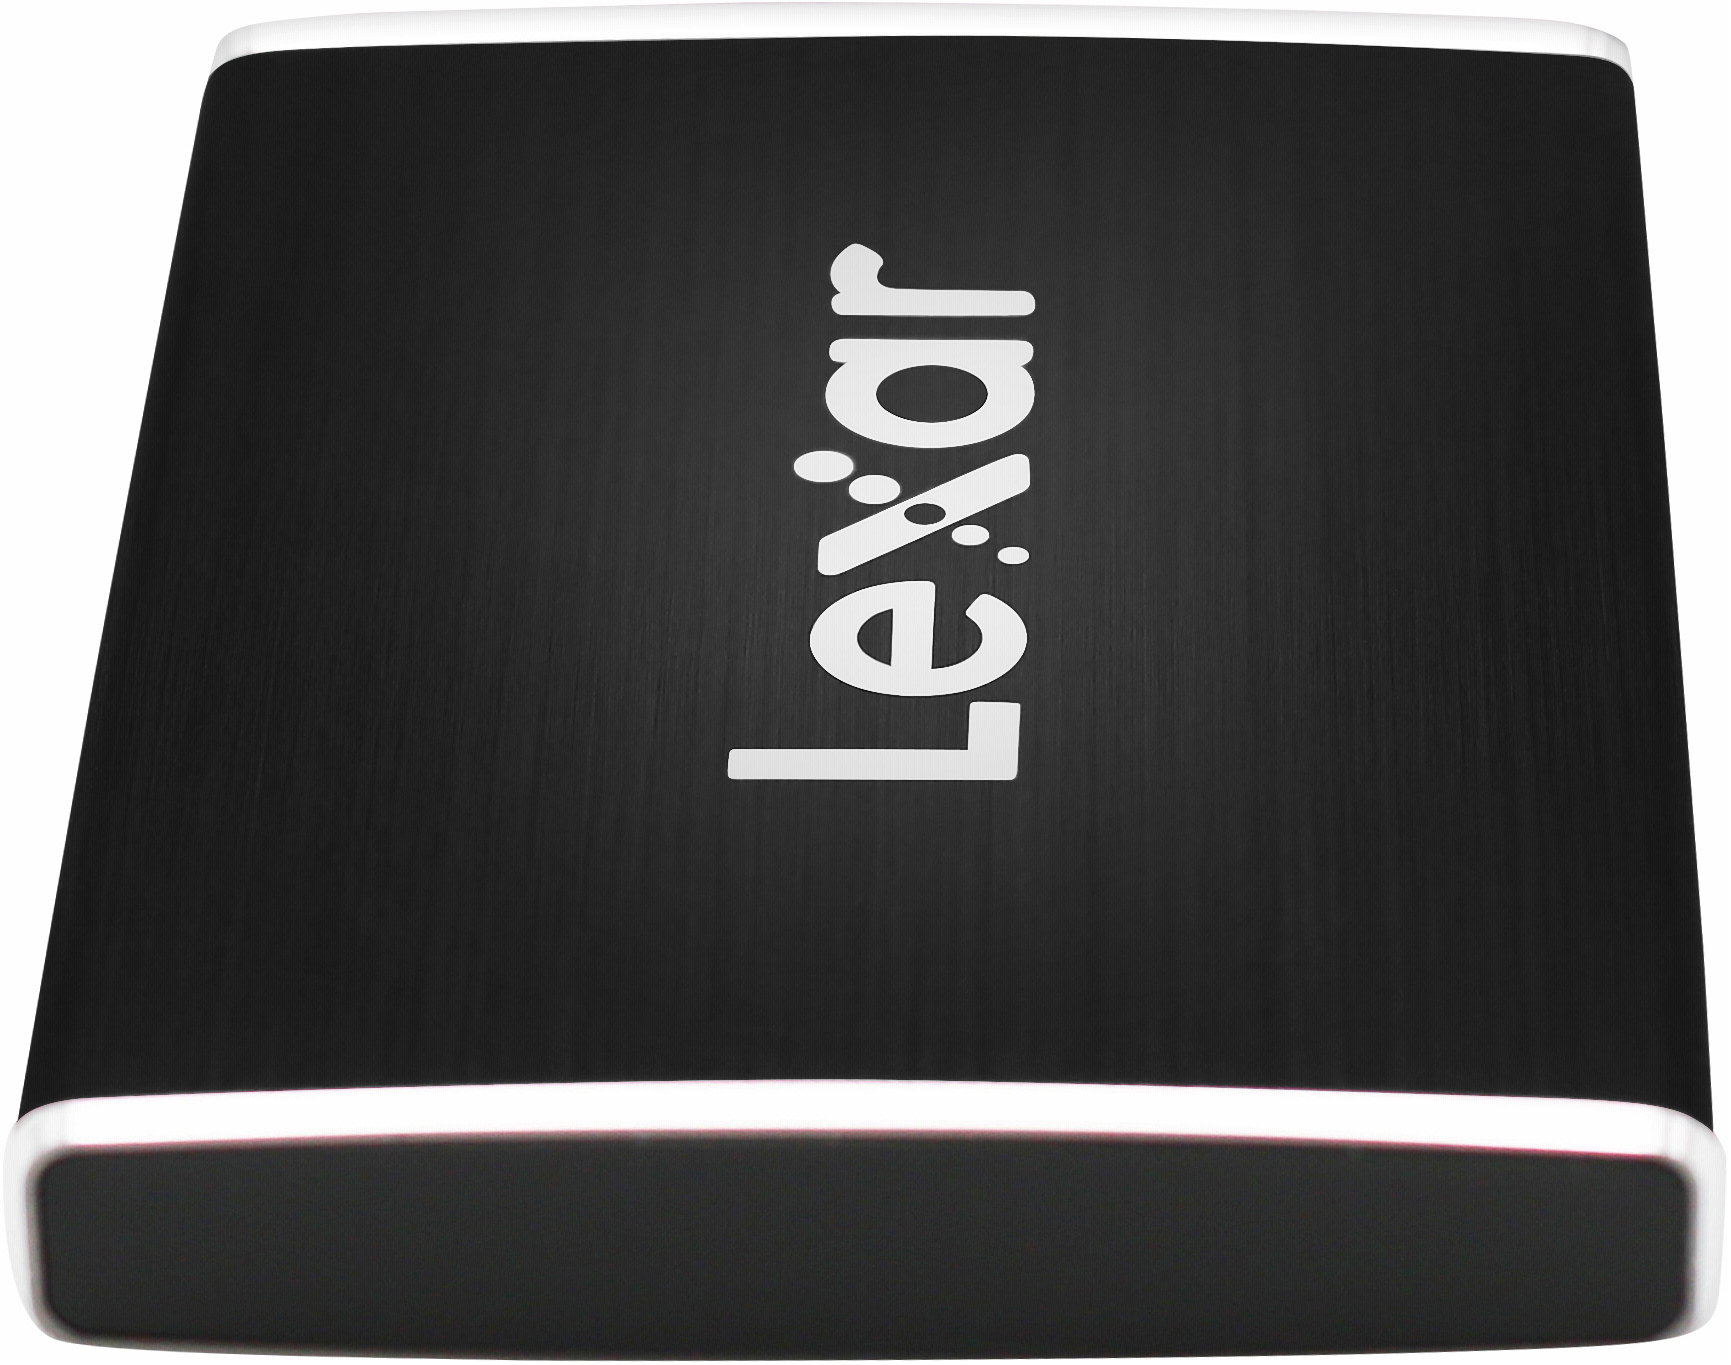 LEXAR SSD, Pro portable Festplatte, 1 Schwarz LSL100 TB extern,